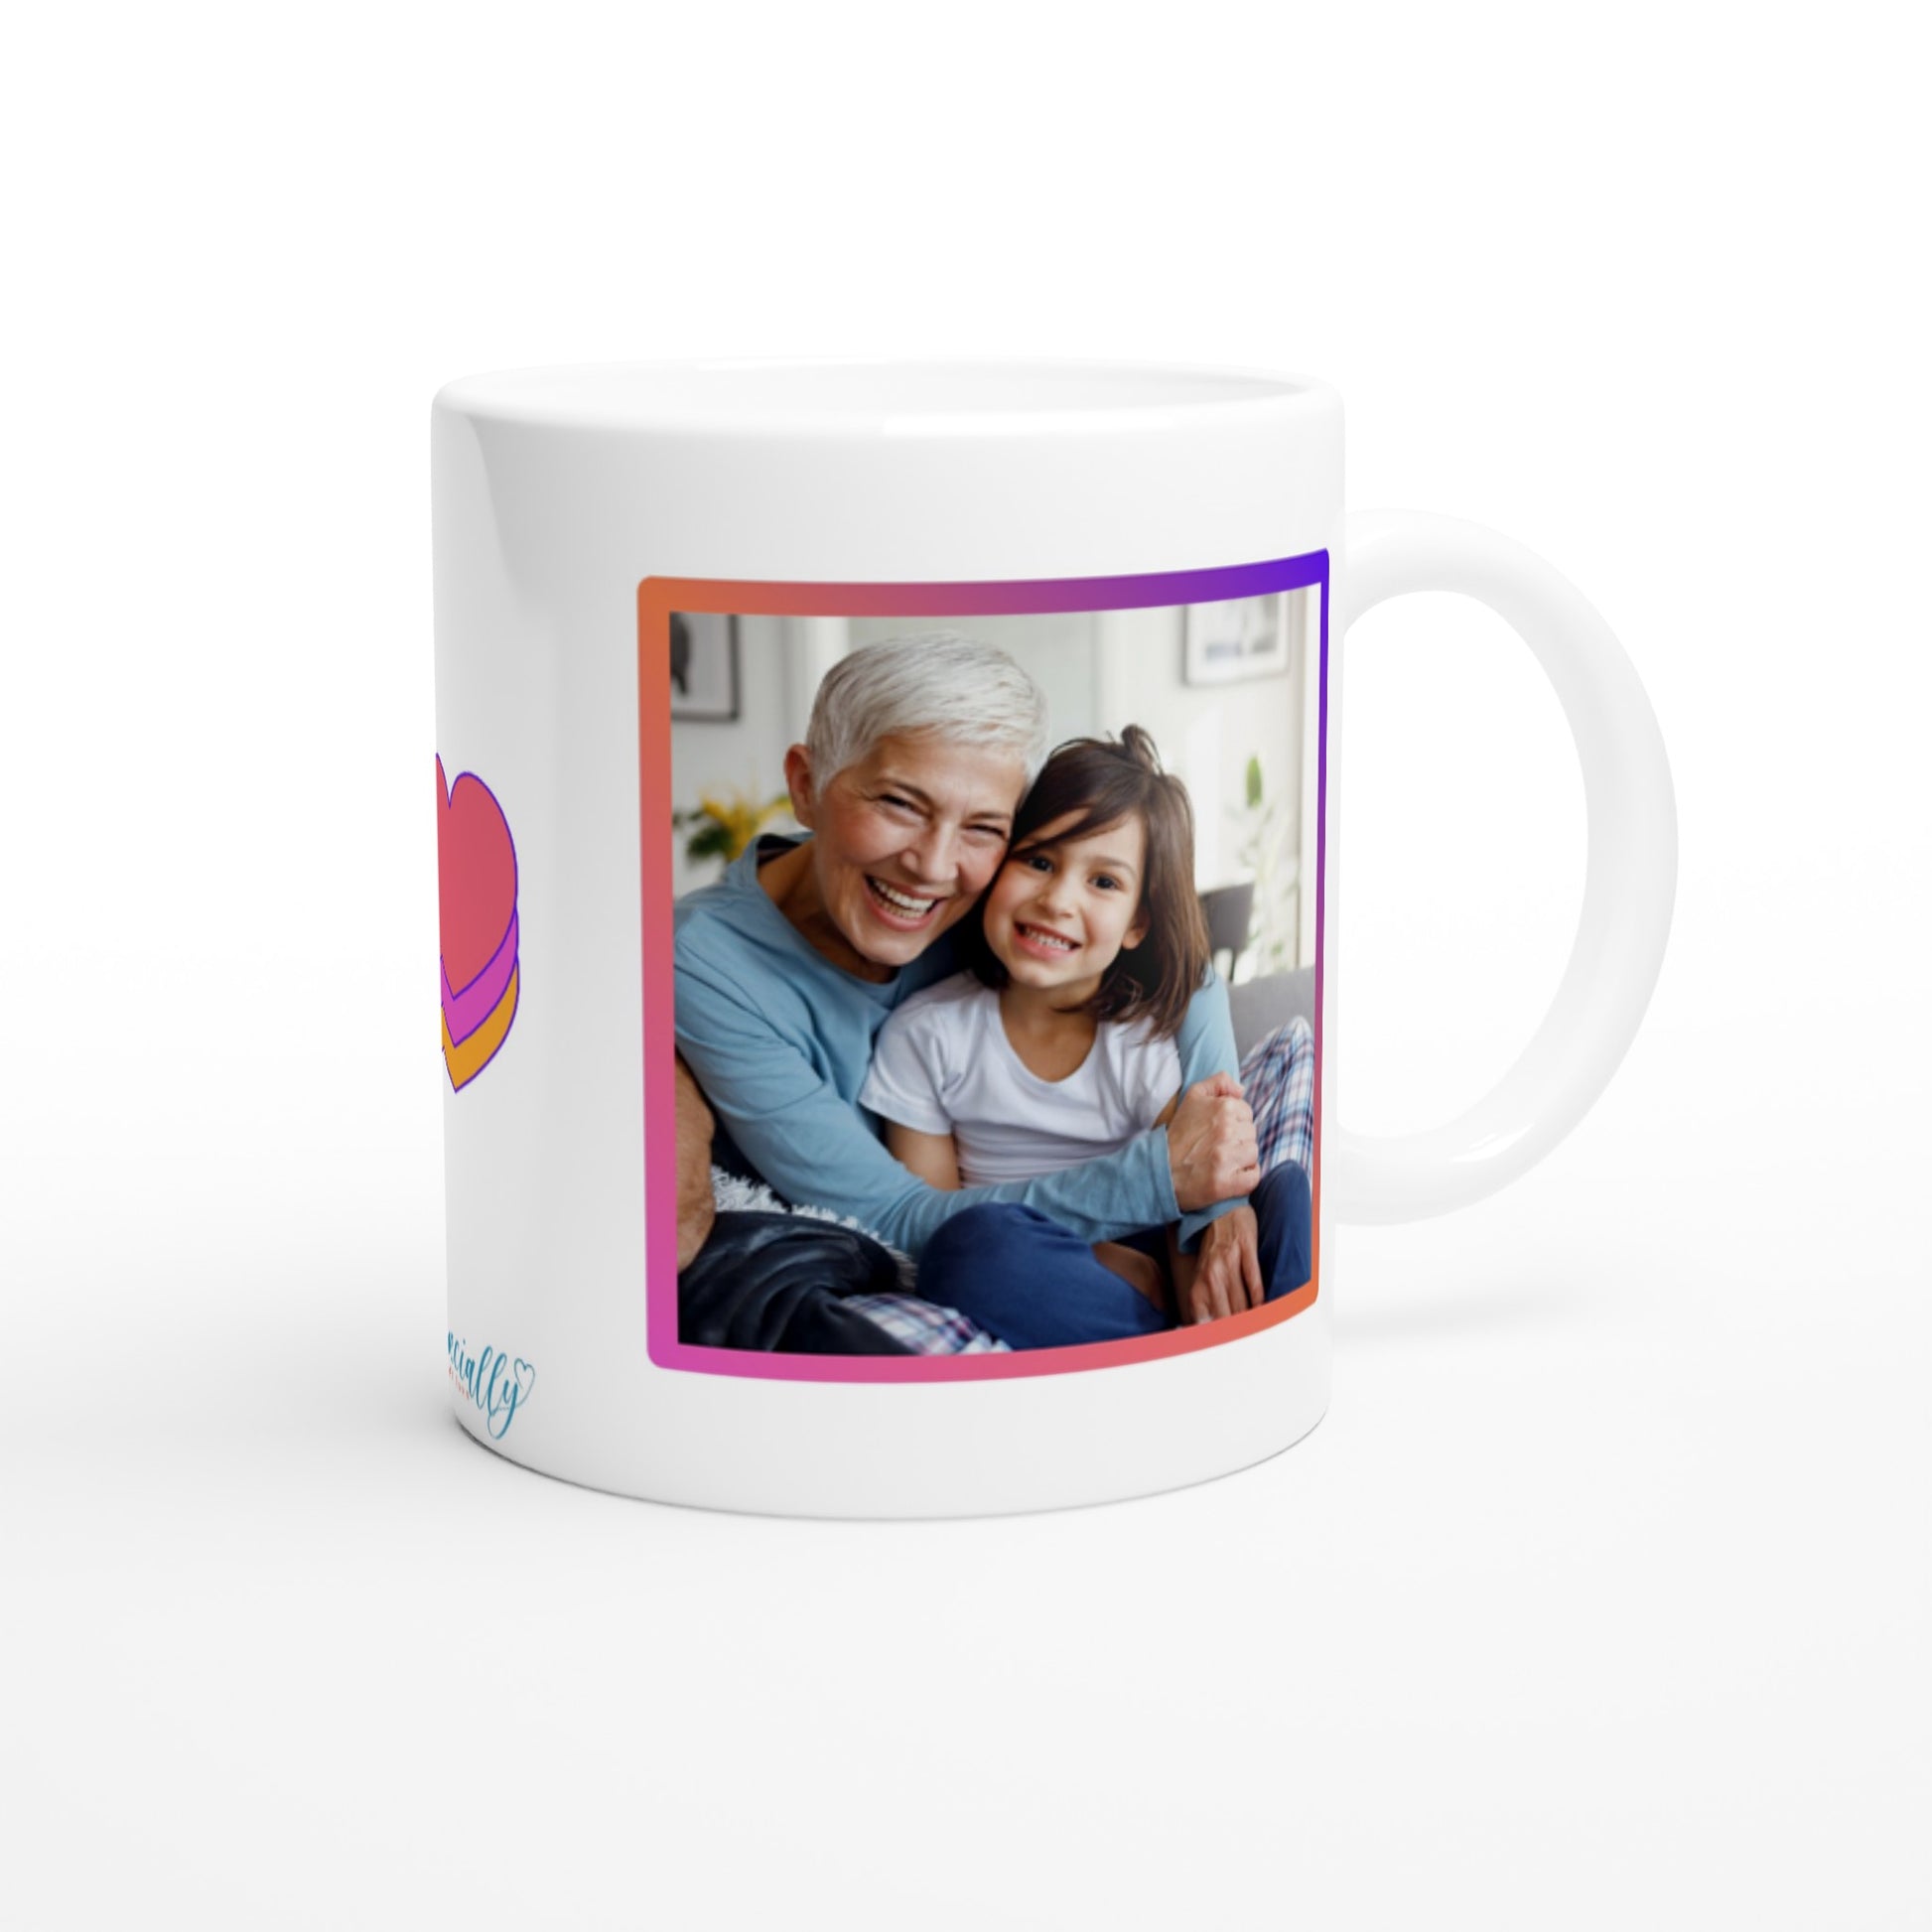 World's Greatest Grandma" Customizable Photo Mug back view